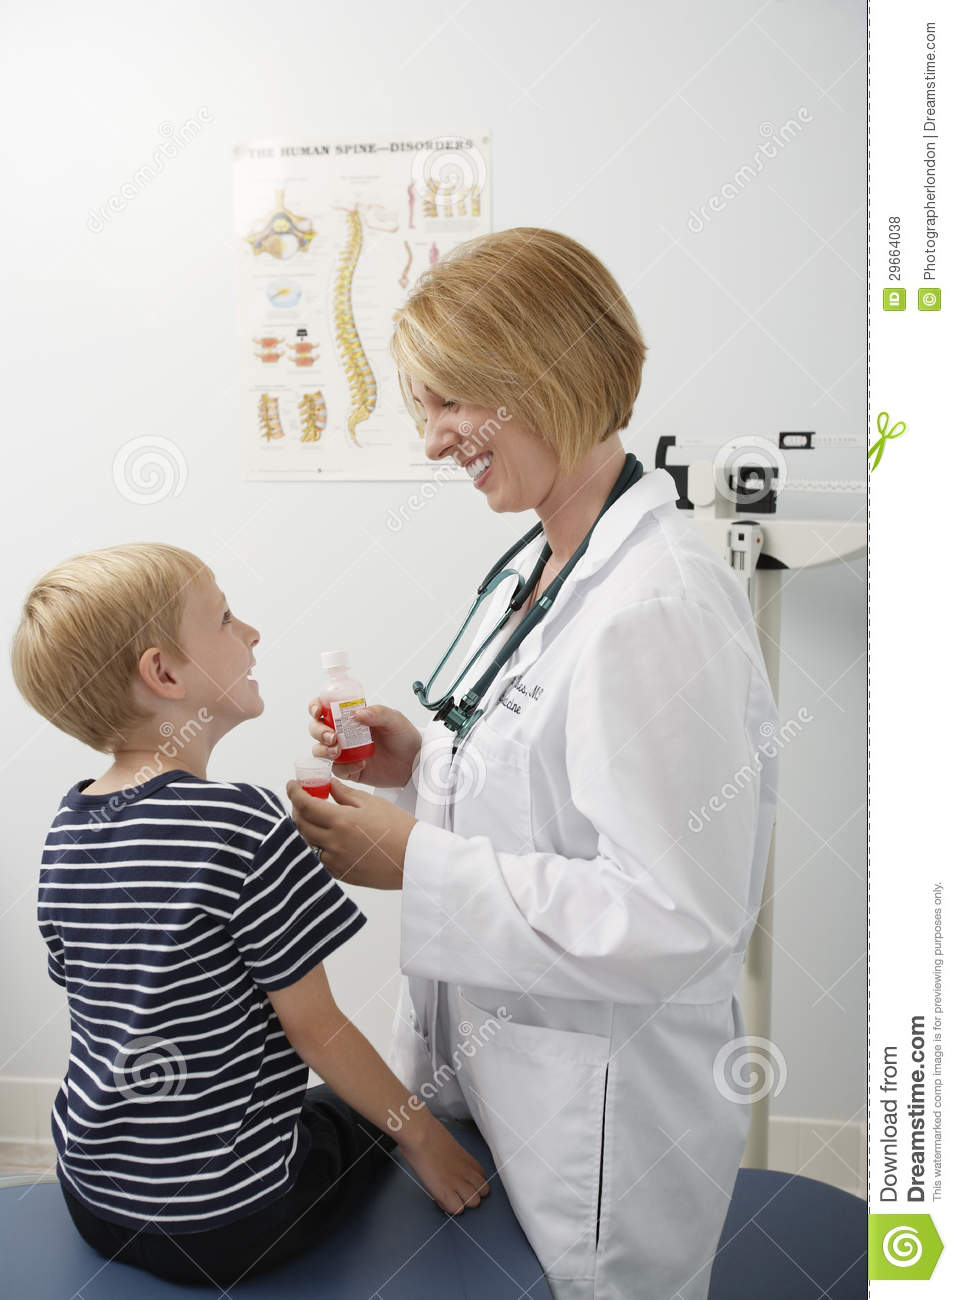 Female Doctor Giving Medicine To A Boy Royalty Free Stock Photos    